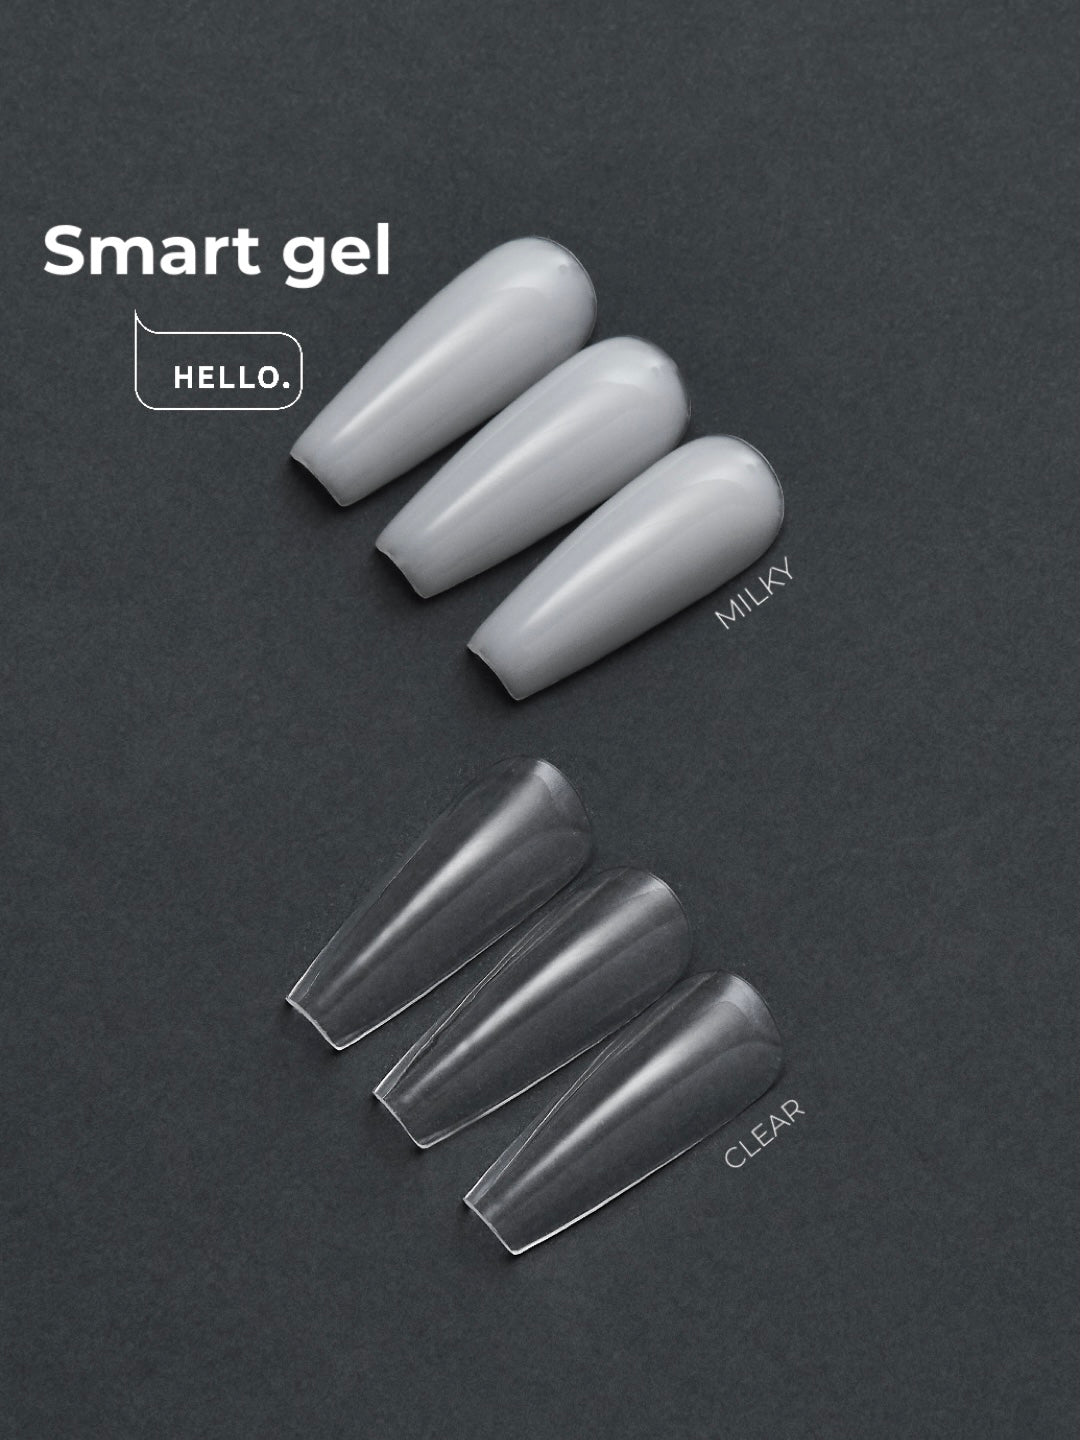 HELLO Smart Gel CLEAR. Basic colección